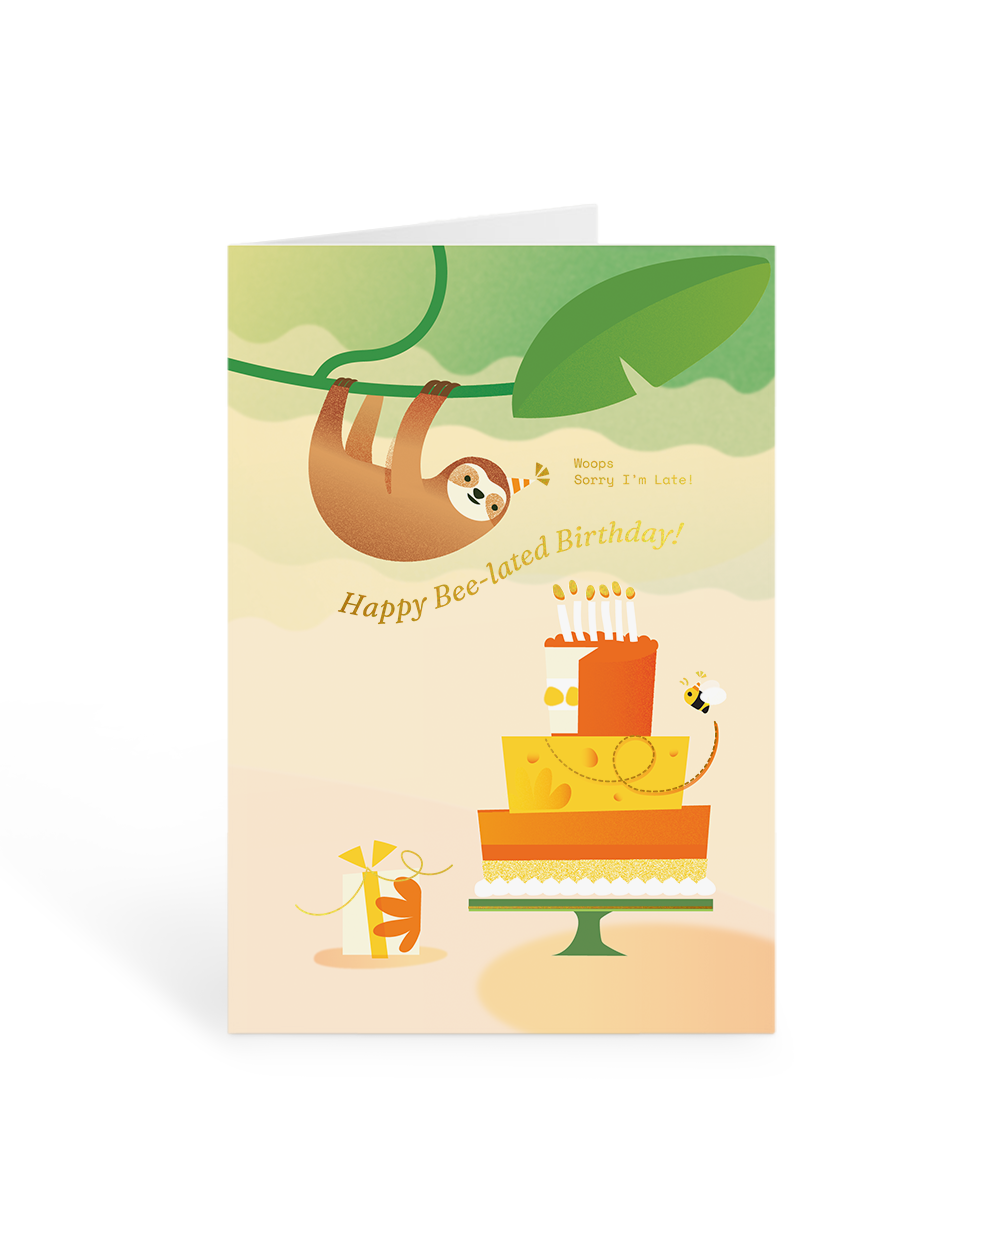 Bee-Lated Birthday Greeting Card